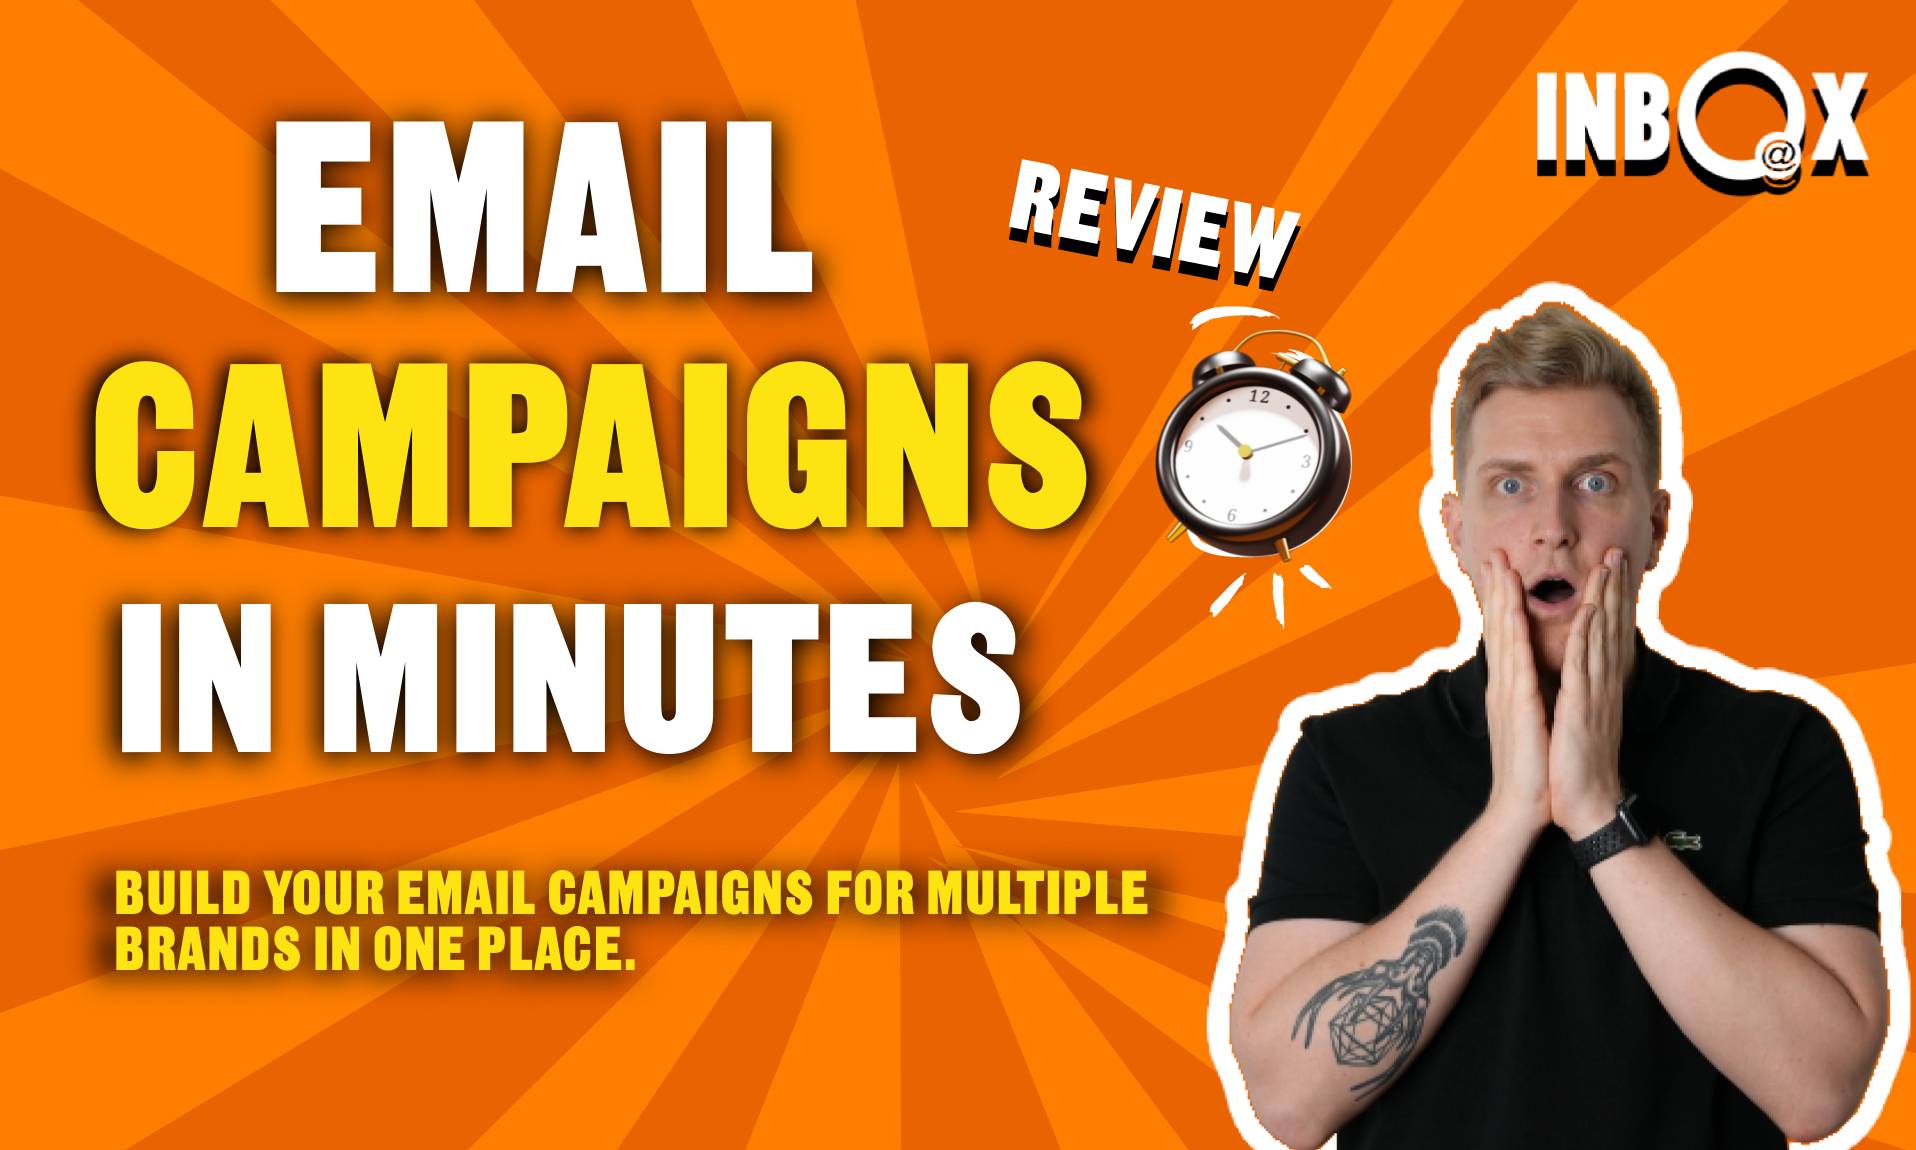 Inbox review - Transactional E-mails, Sender Reputation and E-mail campaigns